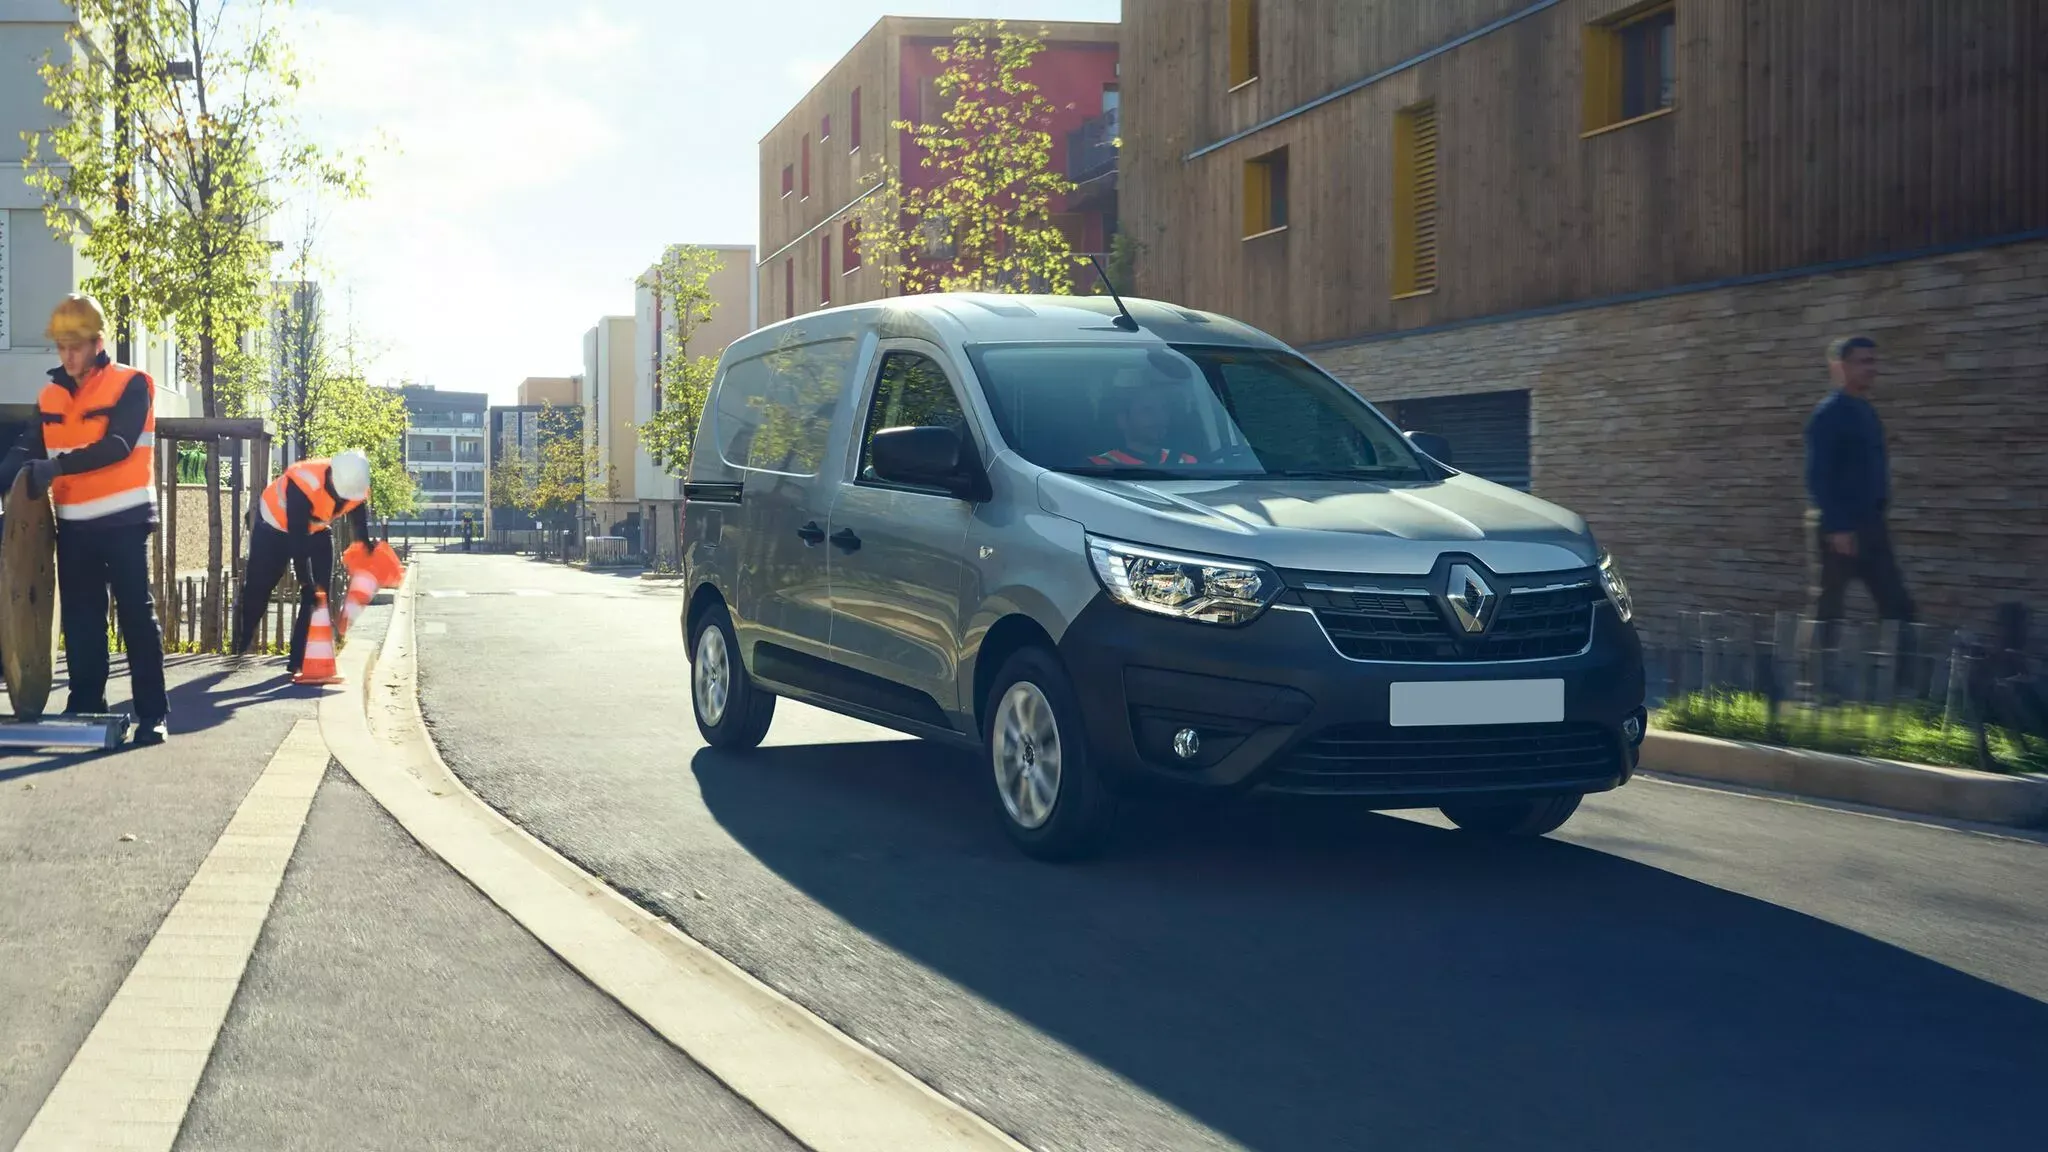 Oferta Renting Renault Express exterior